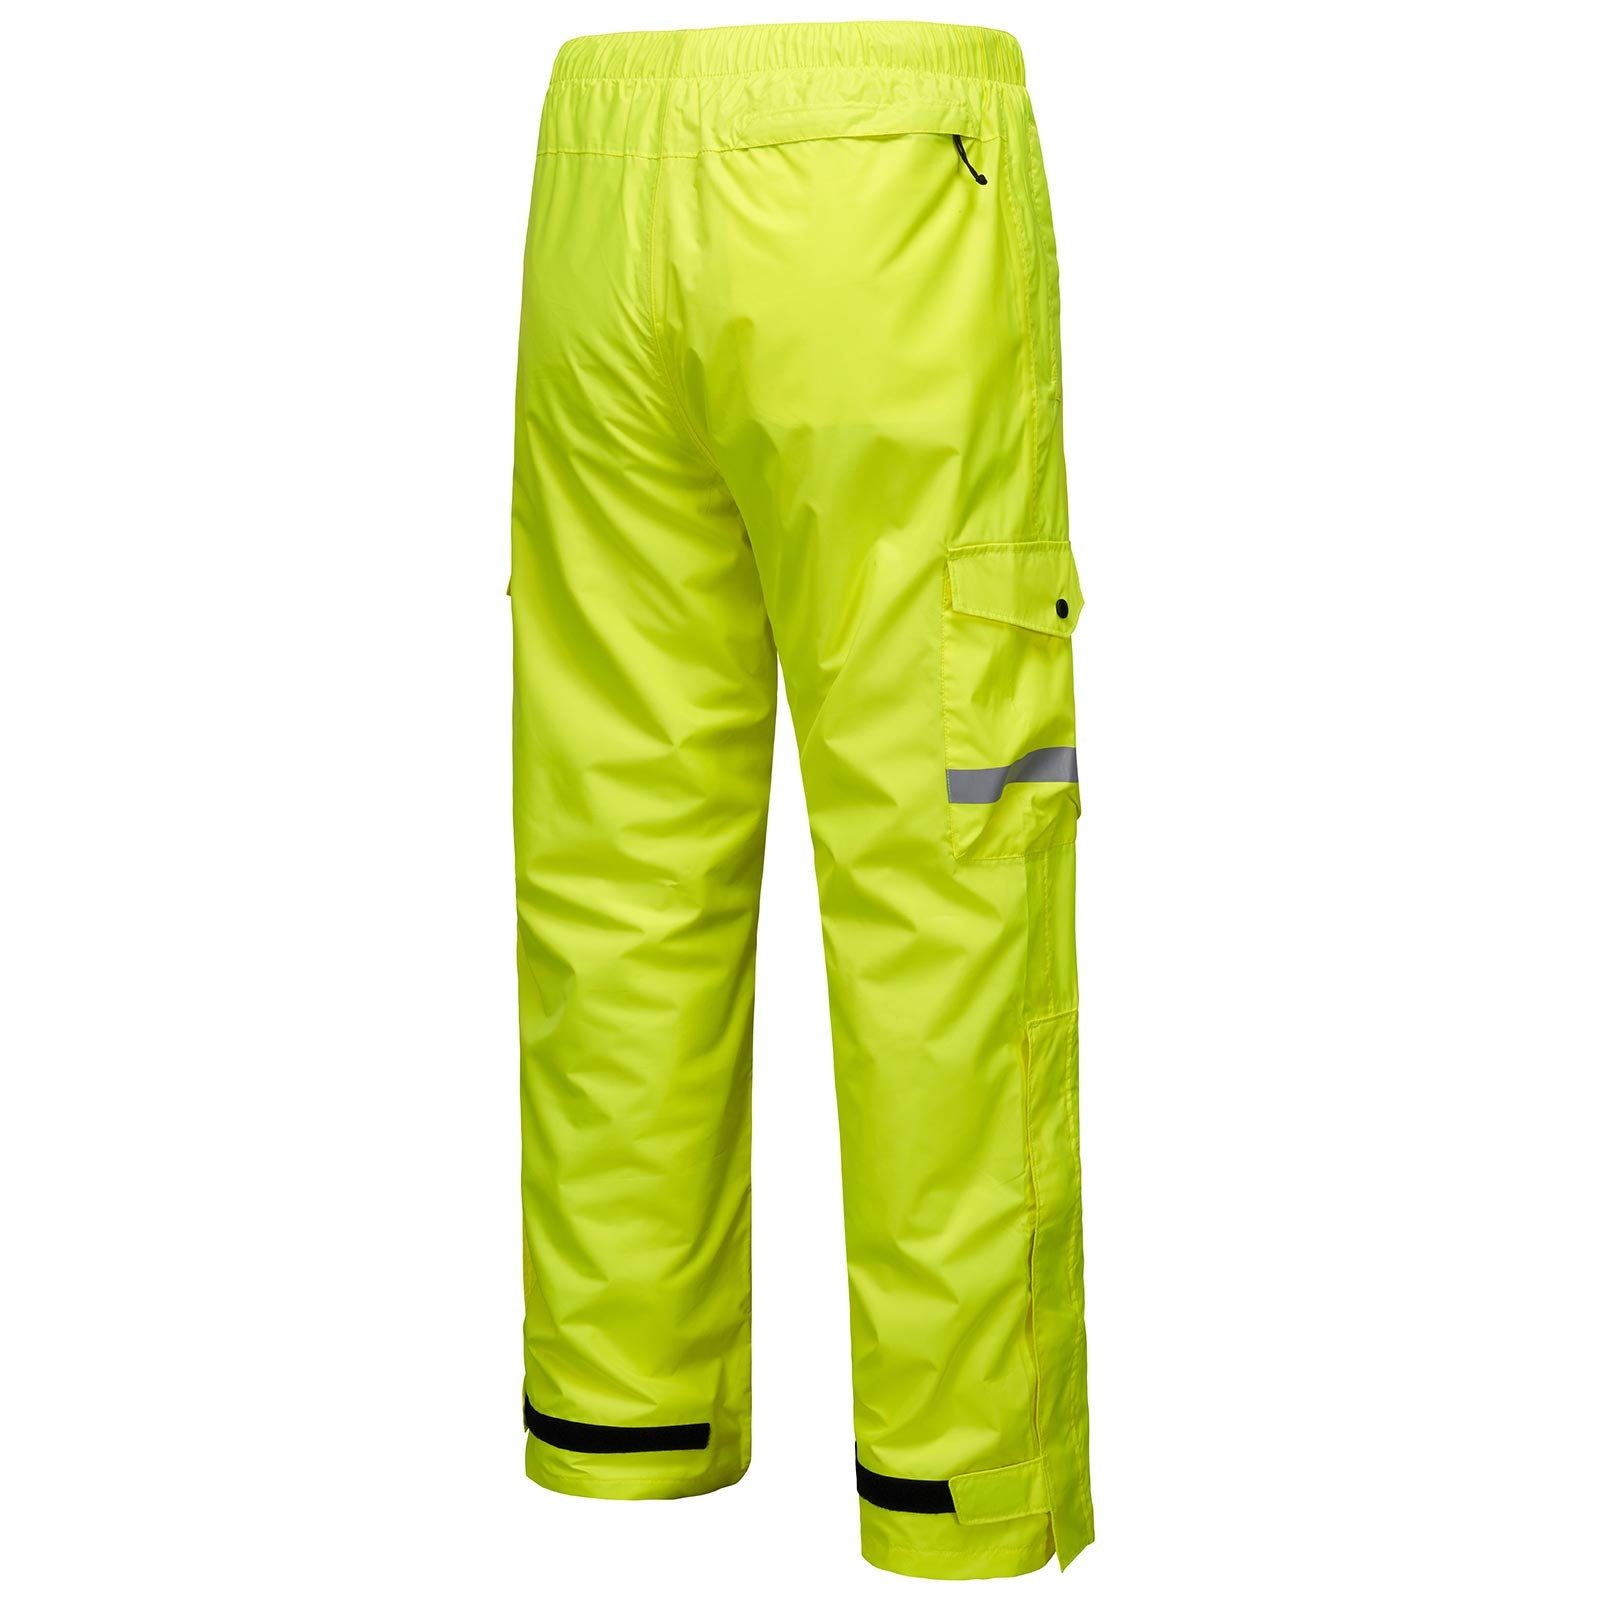 Men’s Complete Breathable Waterproof Rain Pants with 1/2 Zip Legs -  Fluorescent Yellow / S (30-32)W x 30L